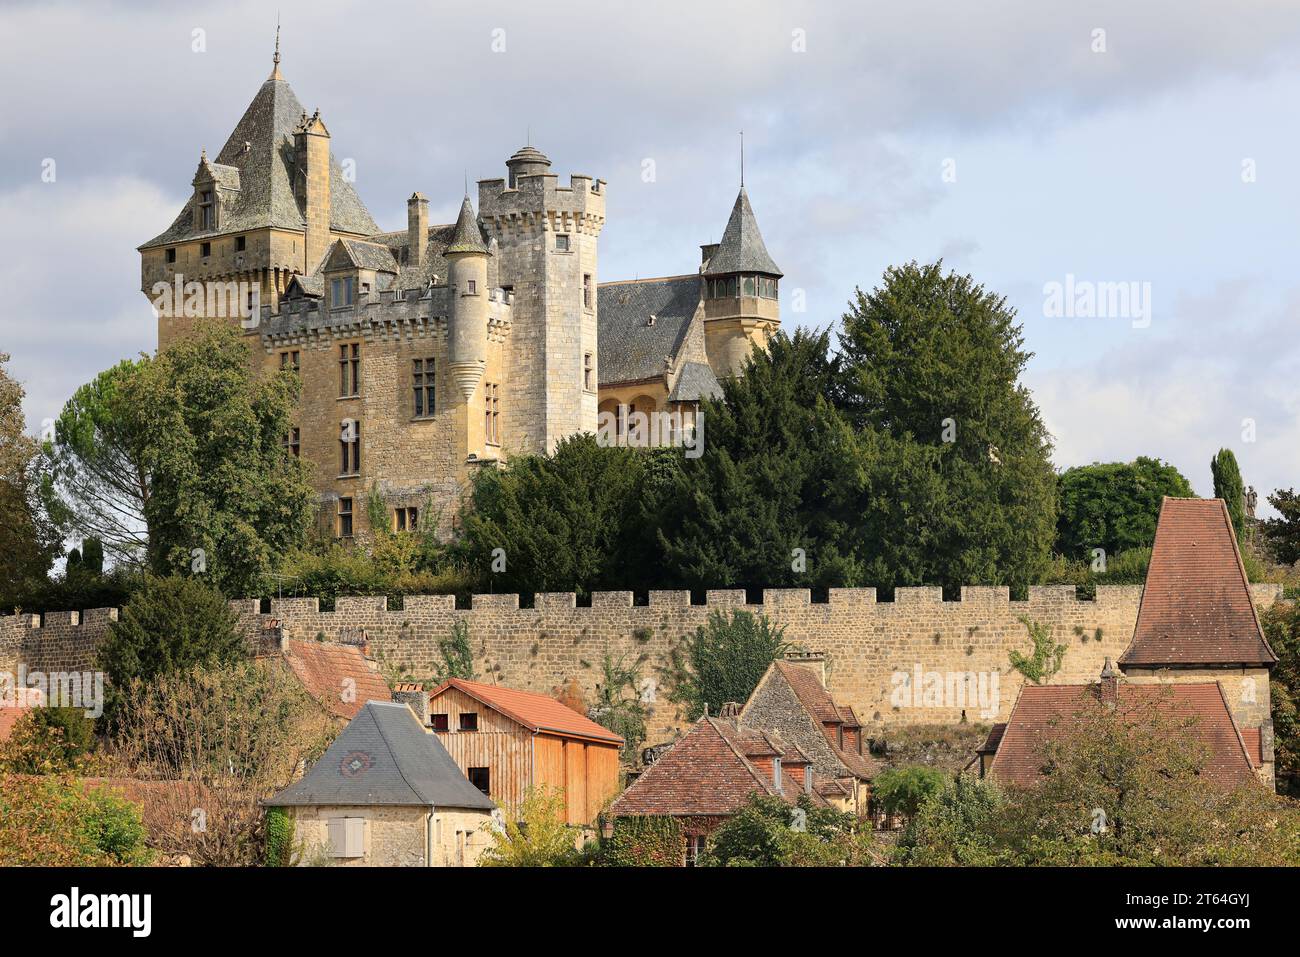 Château and village of Montfort in Périgord Noir near Sarlat. Montfort Castle overlooks the Dordogne River. History, architecture and tourism. Monfort Stock Photo